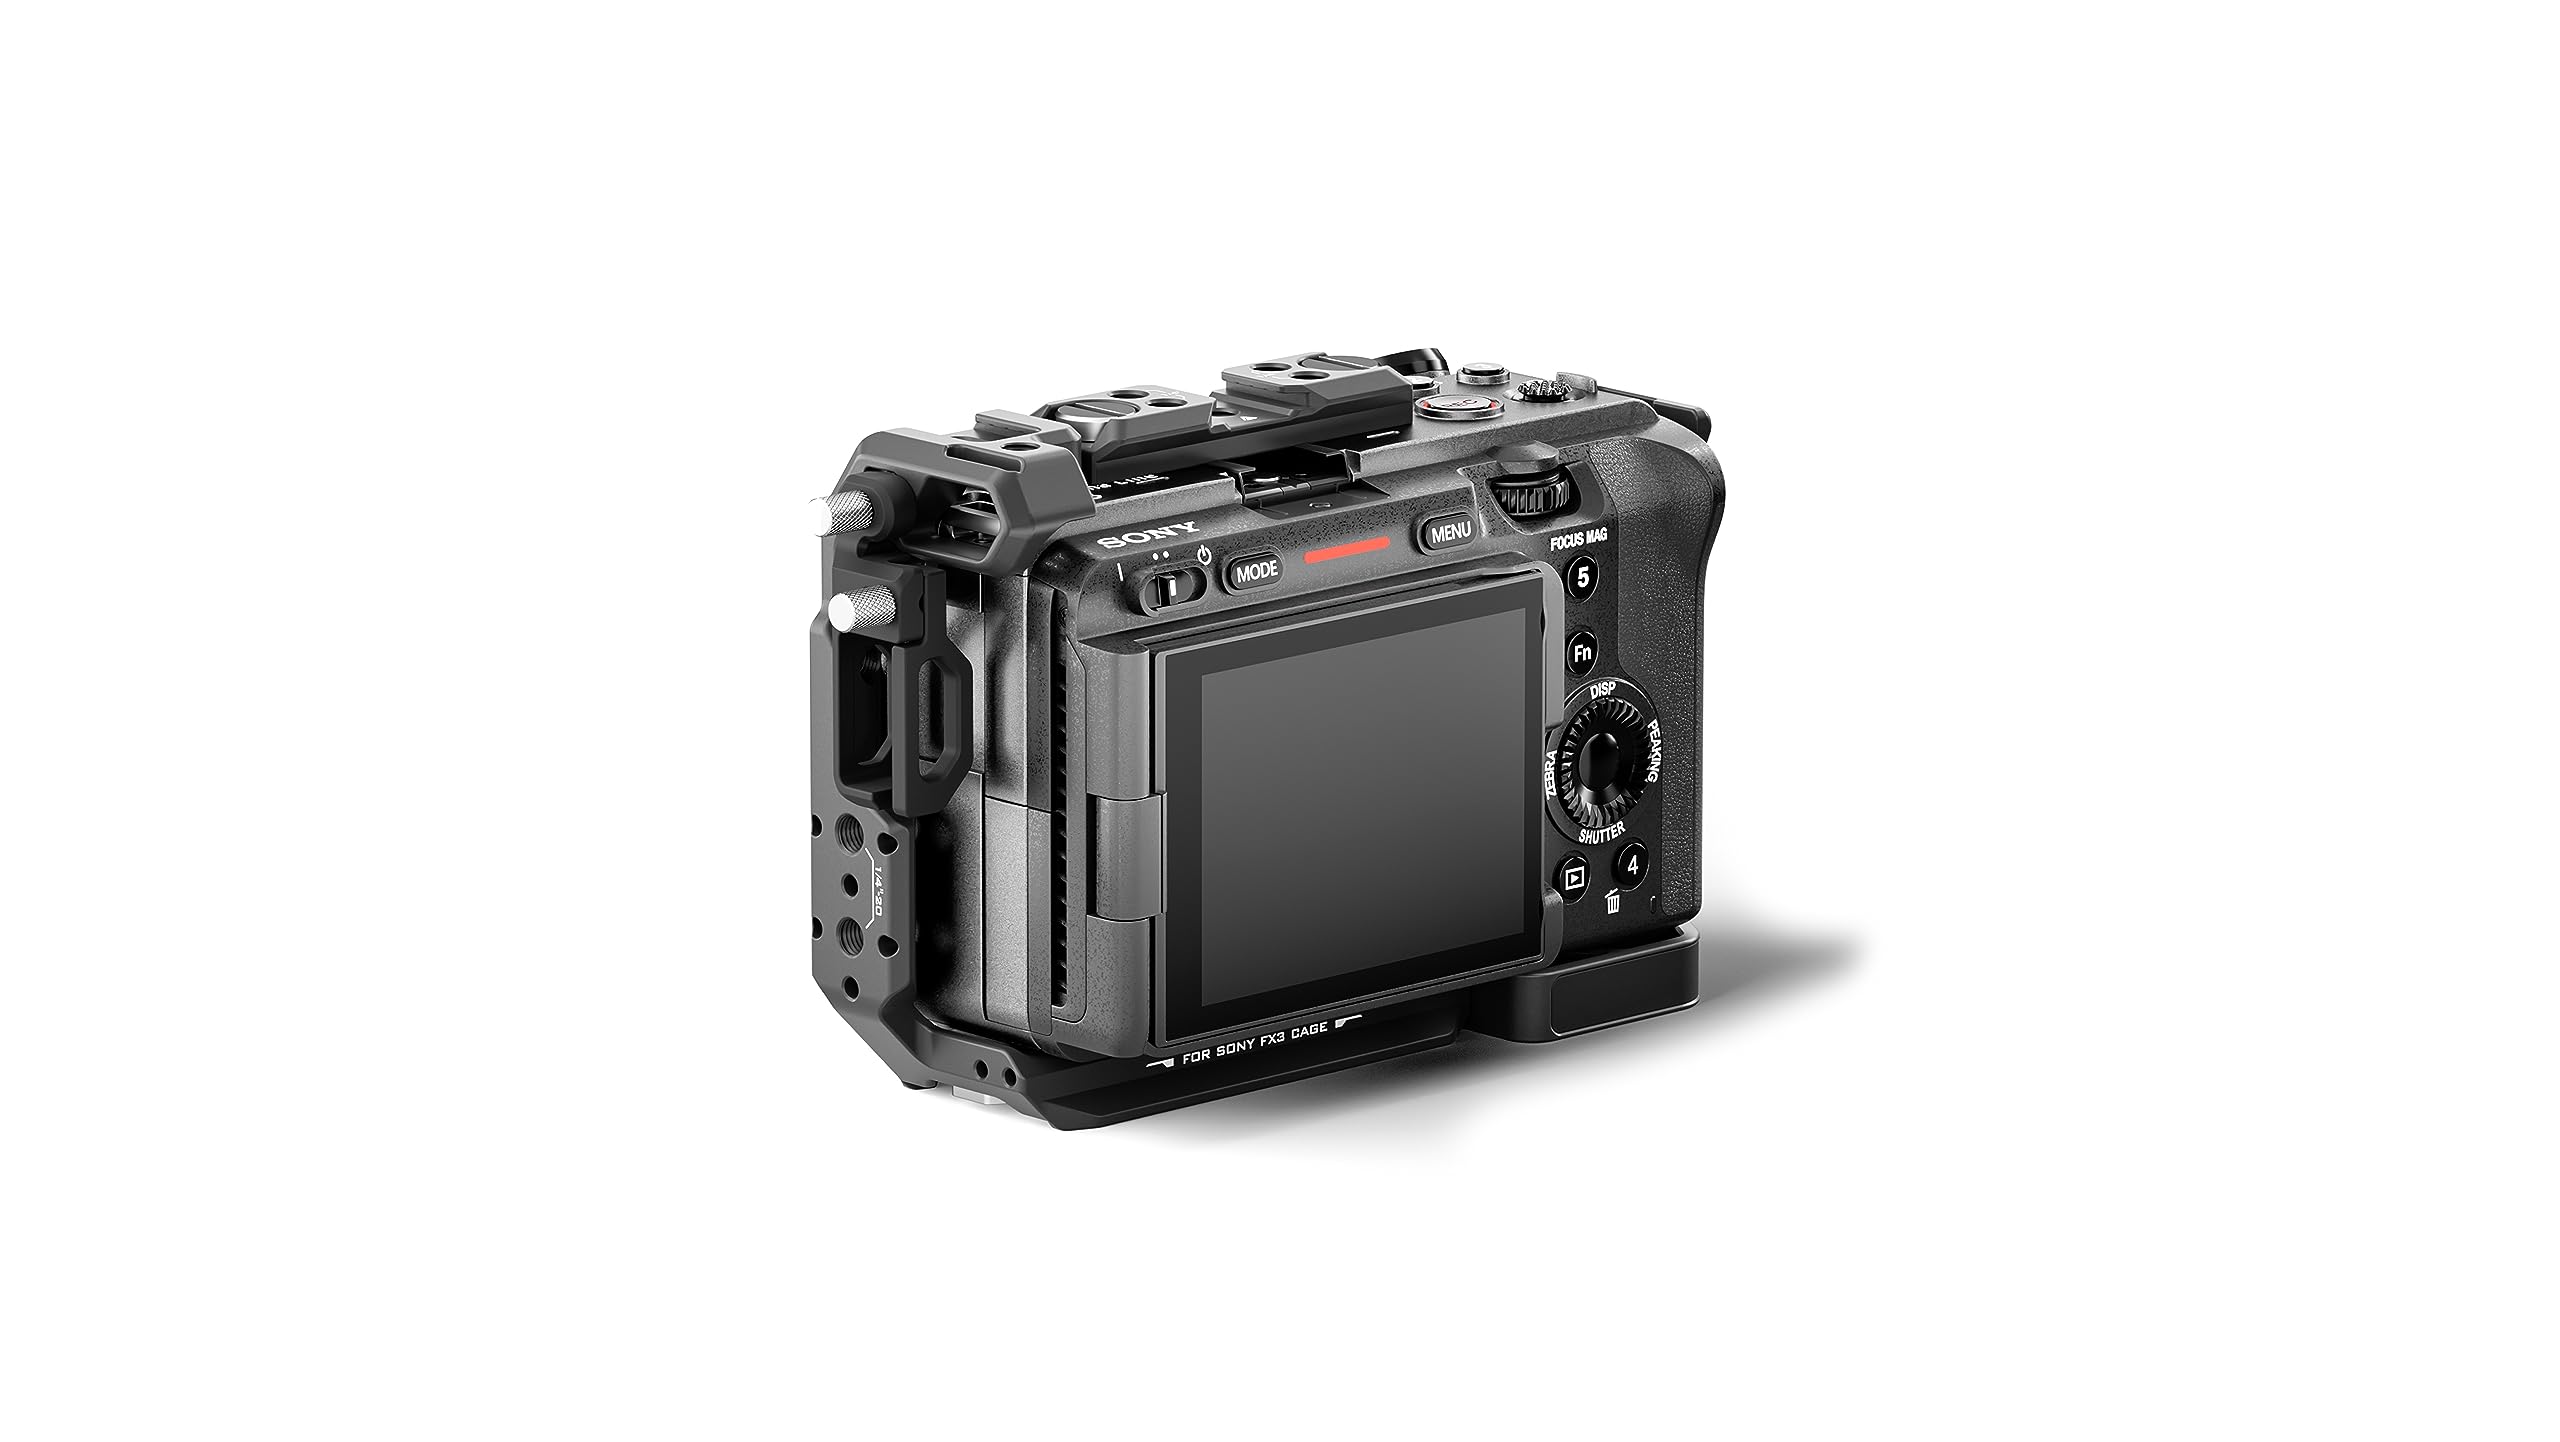 Tilta Full Camera Cage Compatible with Sony FX3/FX30 V2 | Mount Accessories | Cable CLAMP | Modular Design | ARCA Ready | TA-T16-FCC (Black)